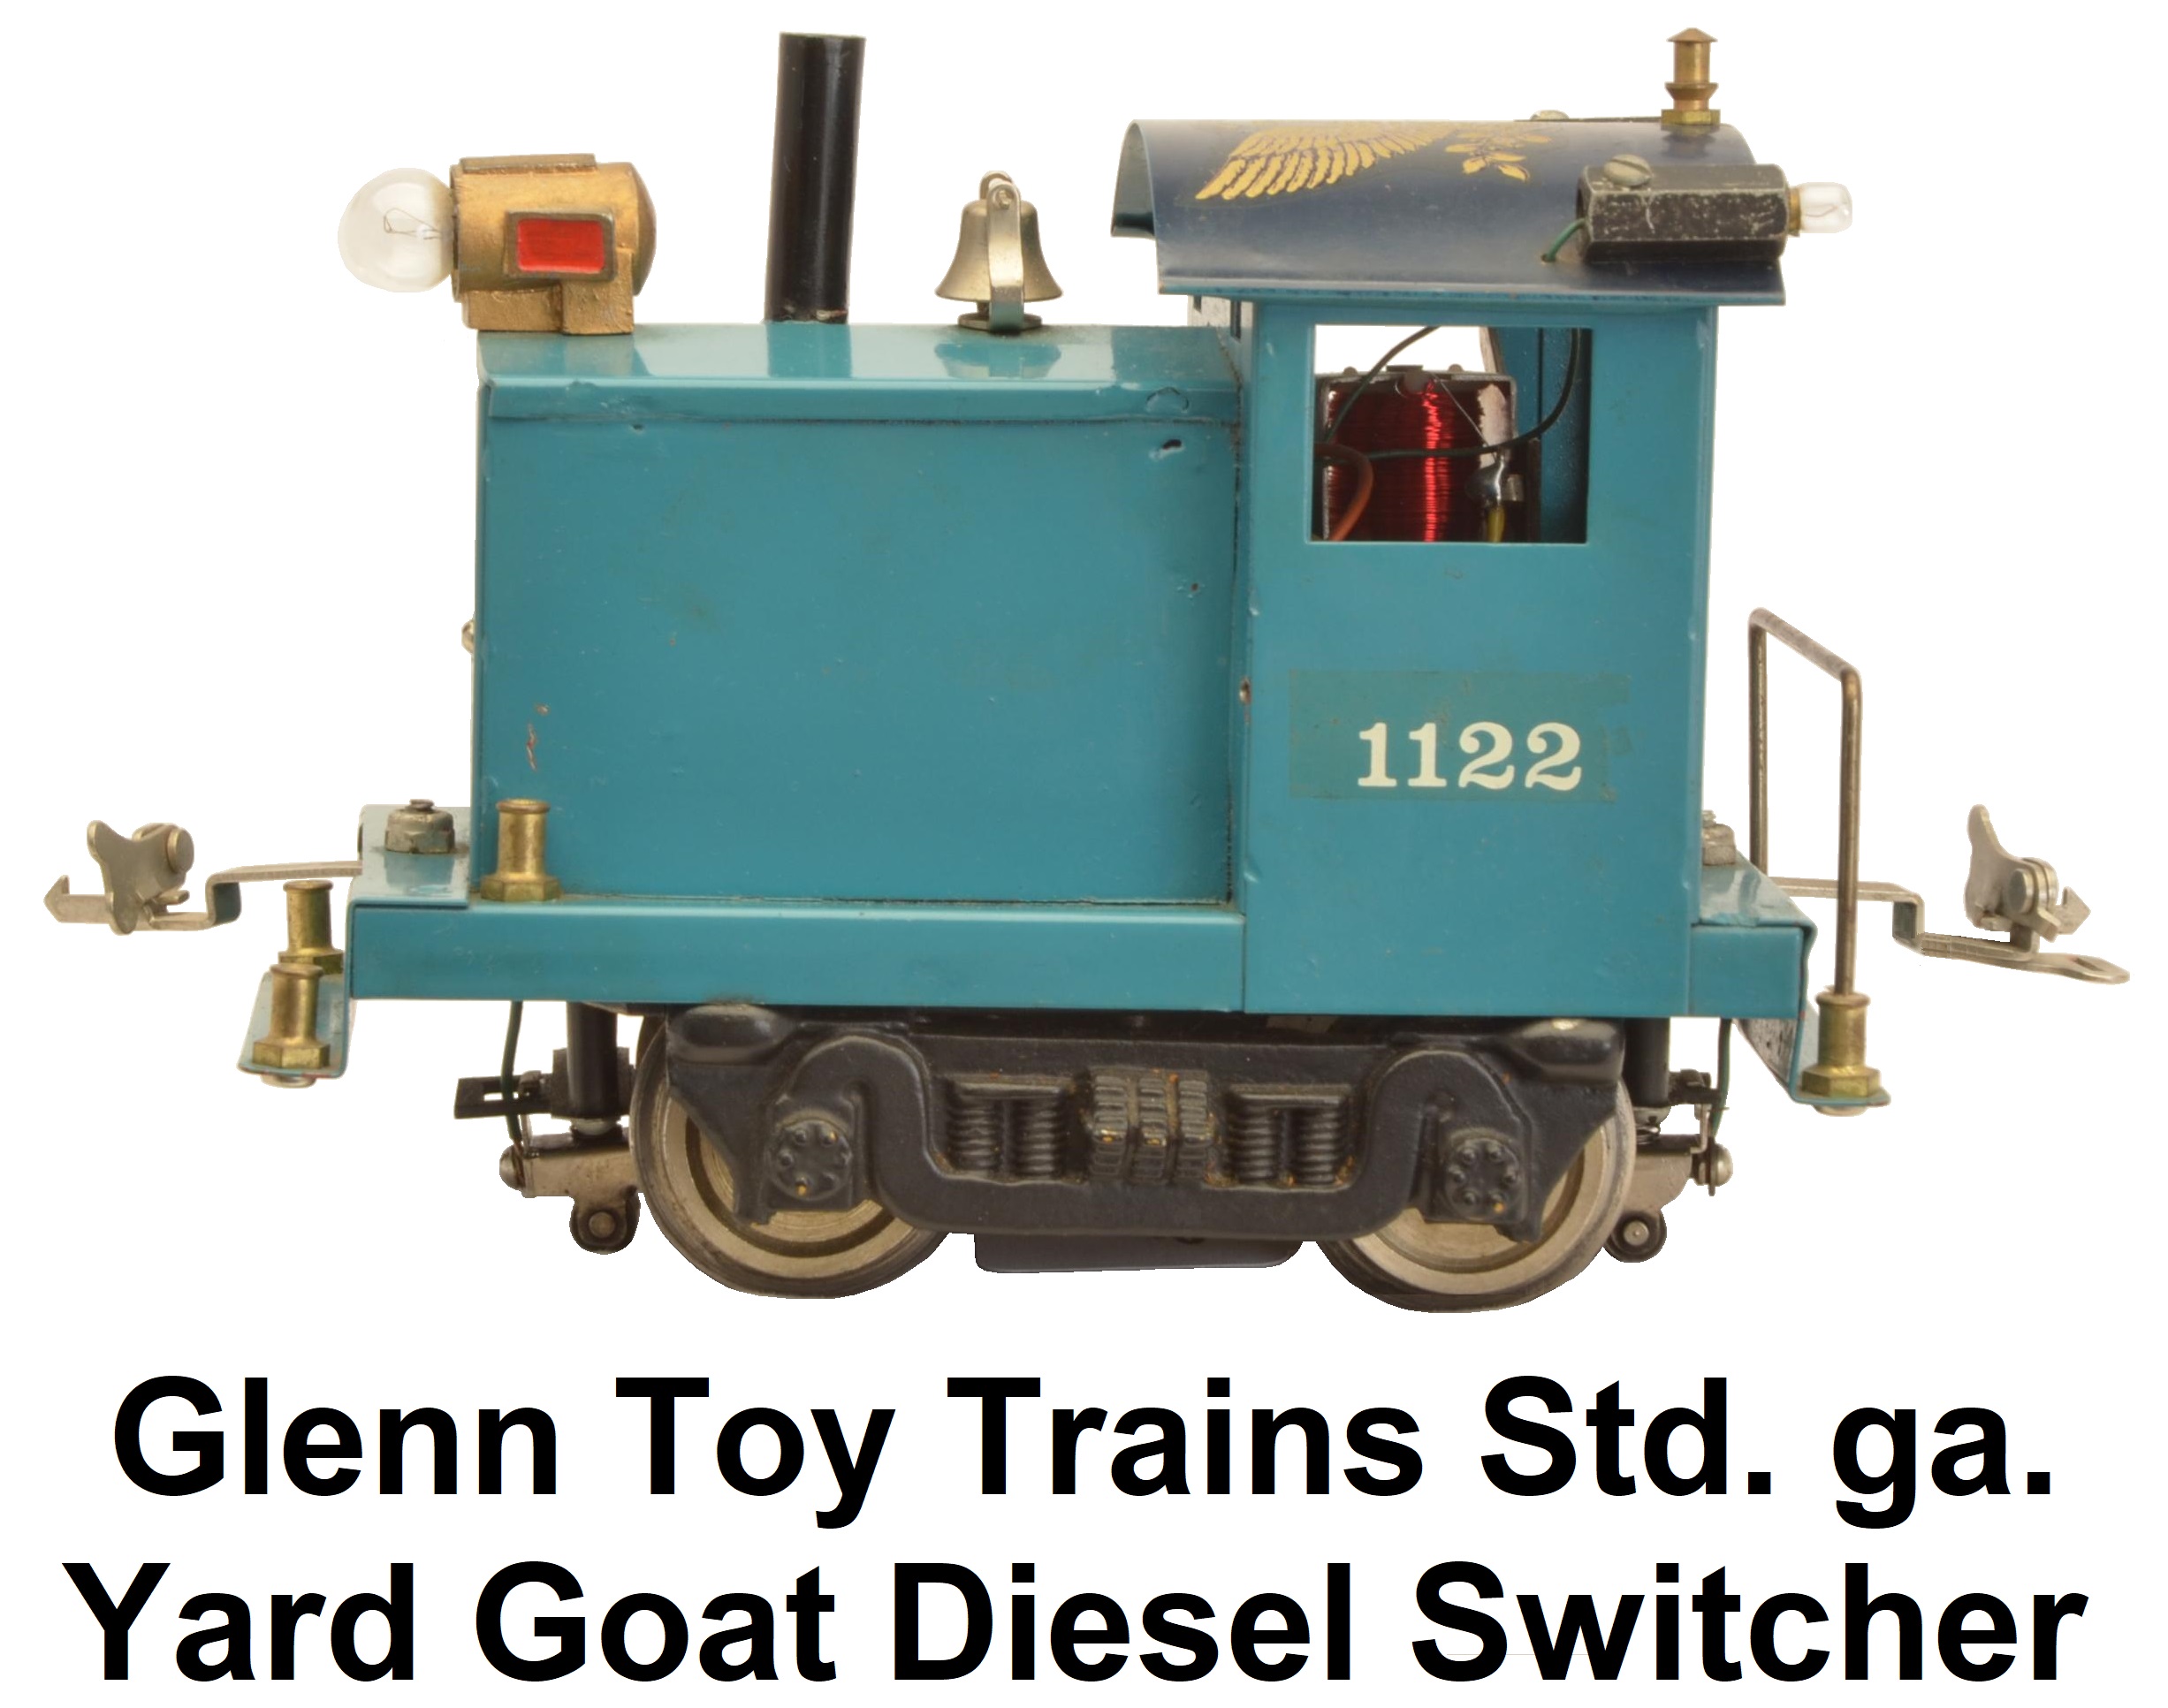 Glenn Gerhart Glenn Toy Trains Std. Ga. Blue Yard Goat Diesel Switcher Numbered 1122